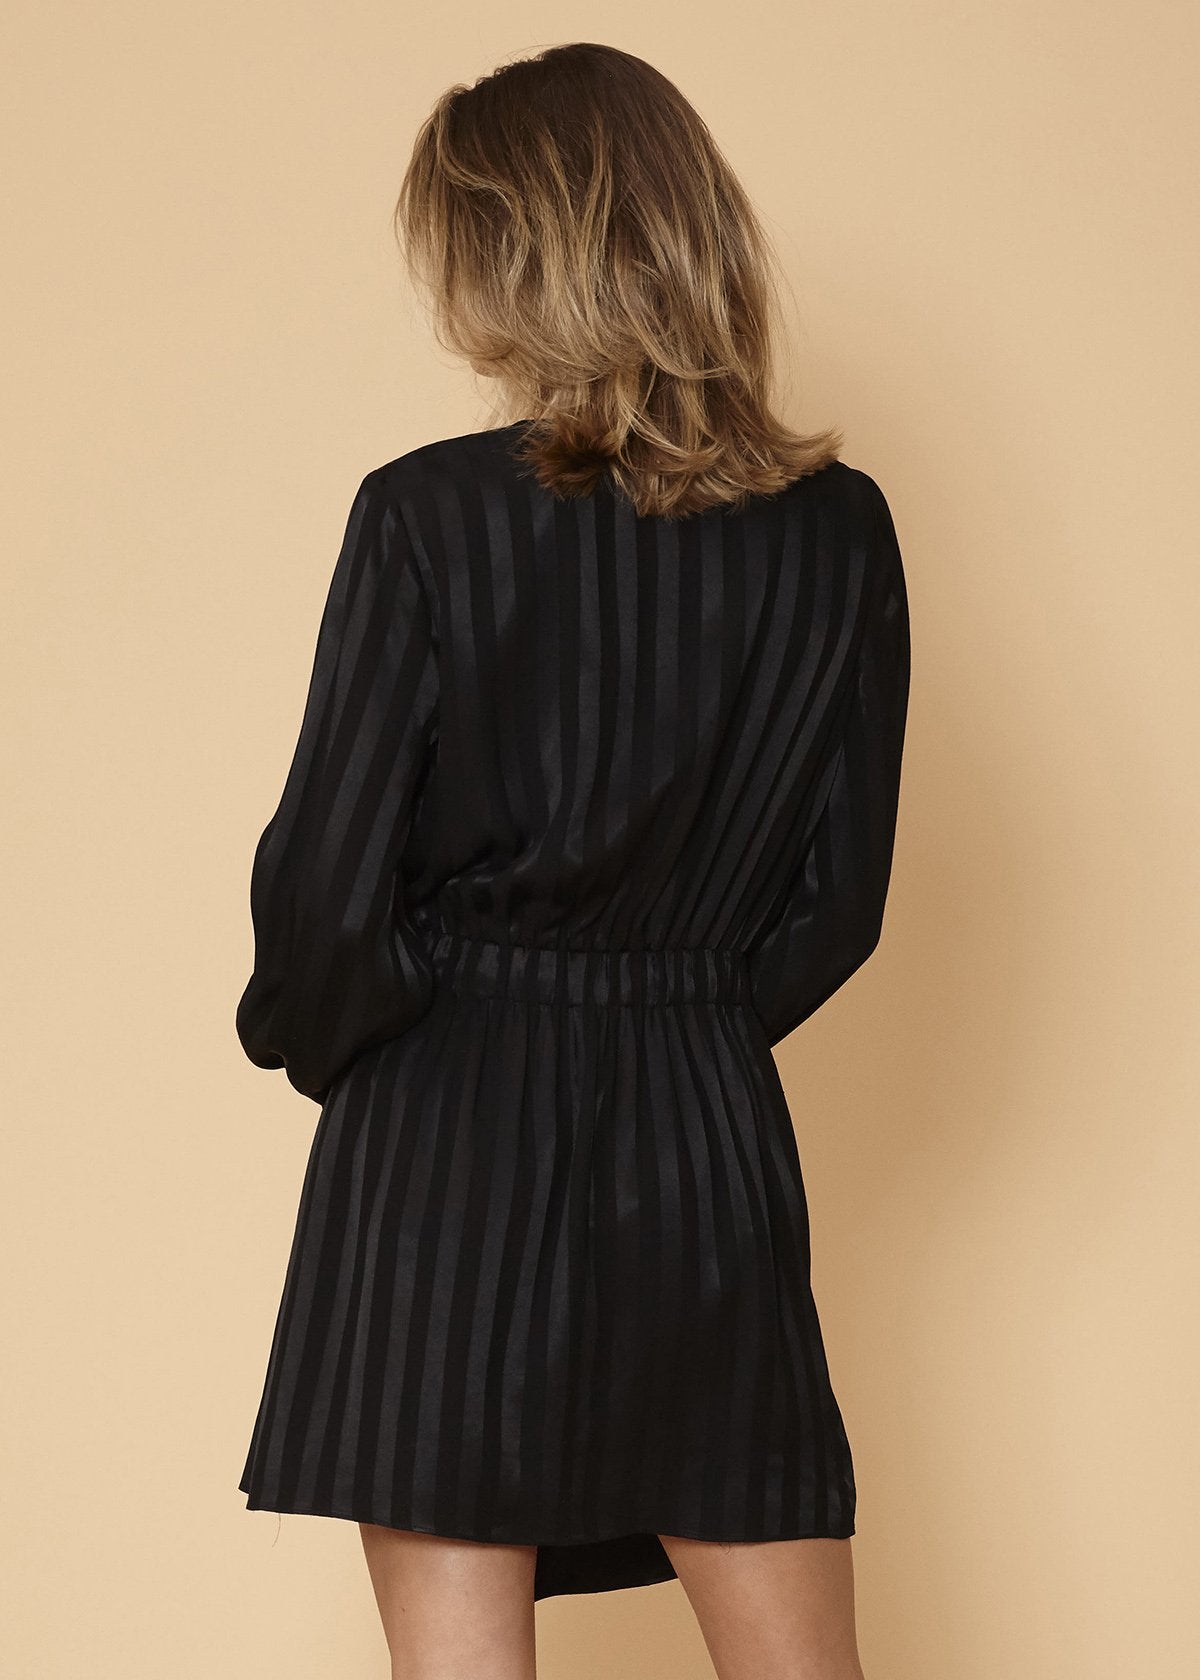 Stripe Satin Long Sleeve Mini Dress in Black by Shop at Konus